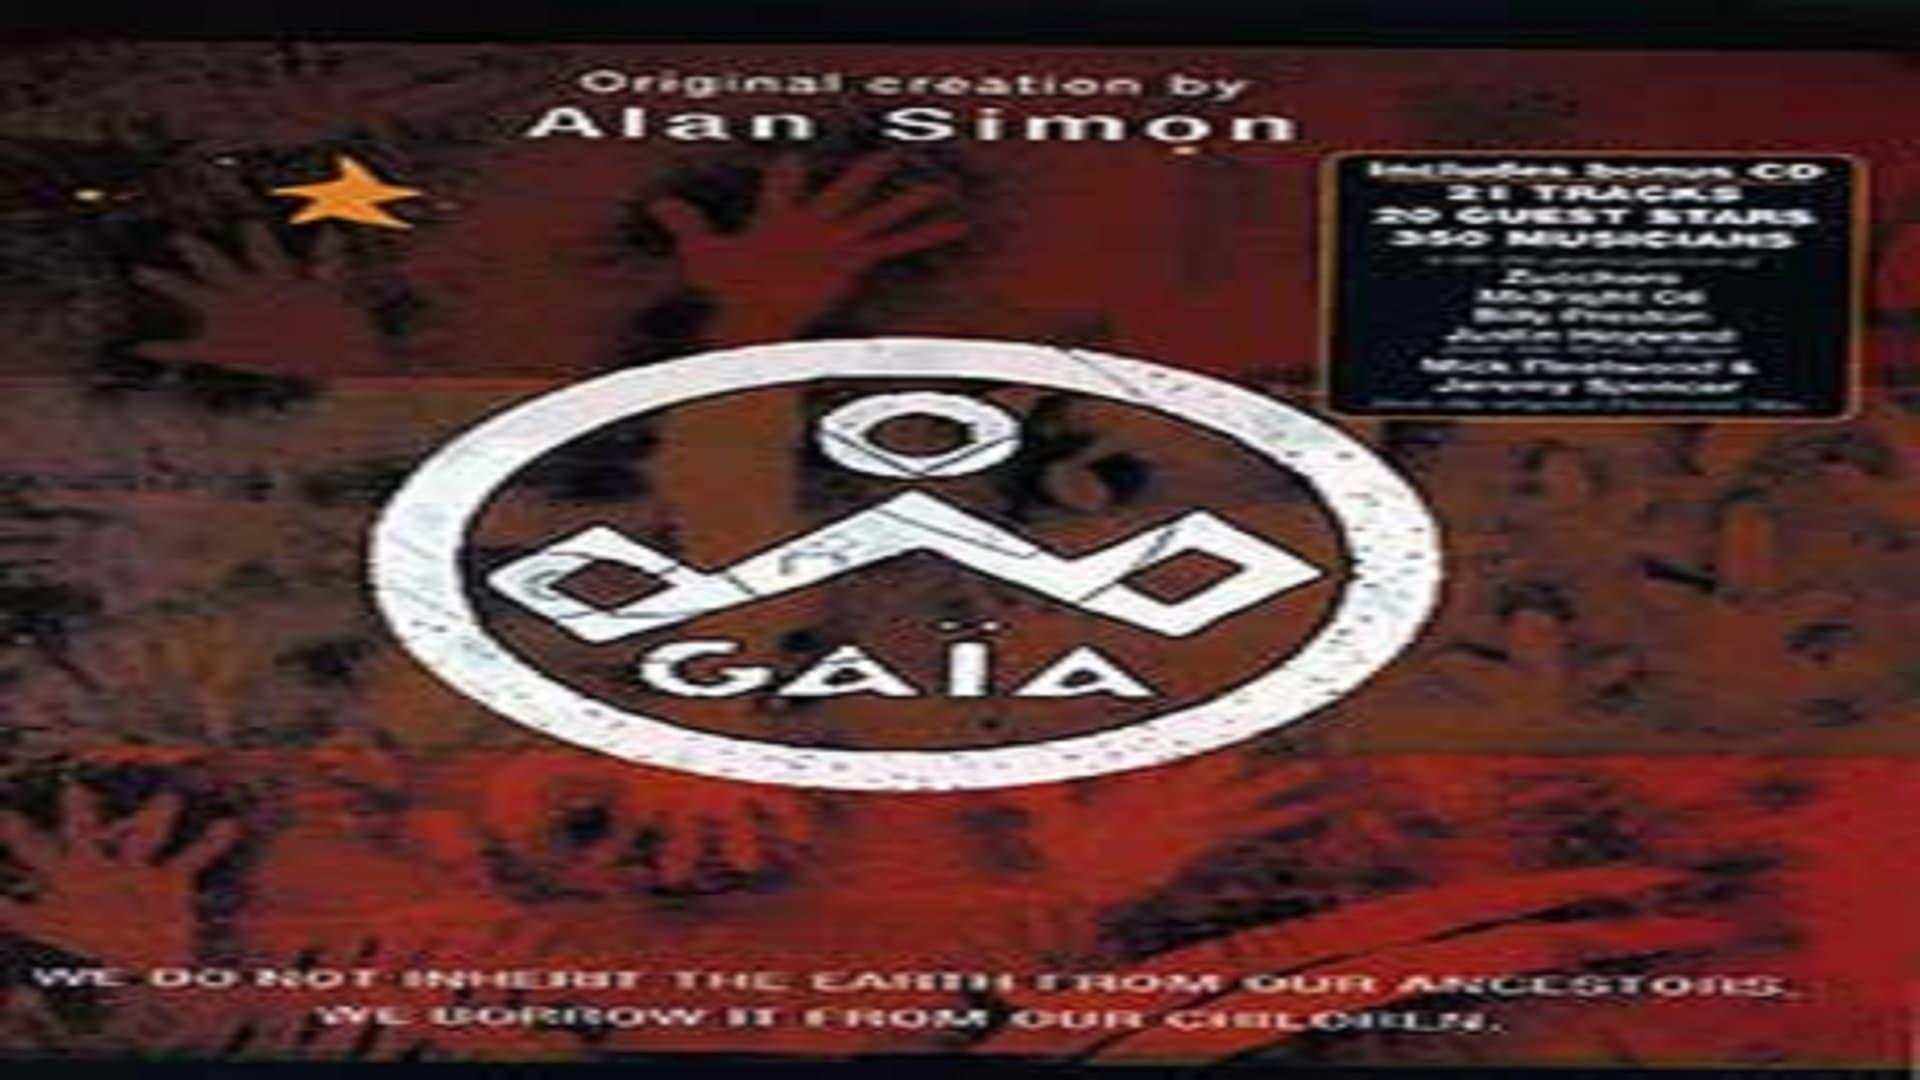 Alan Simon ‎– Gaia backdrop